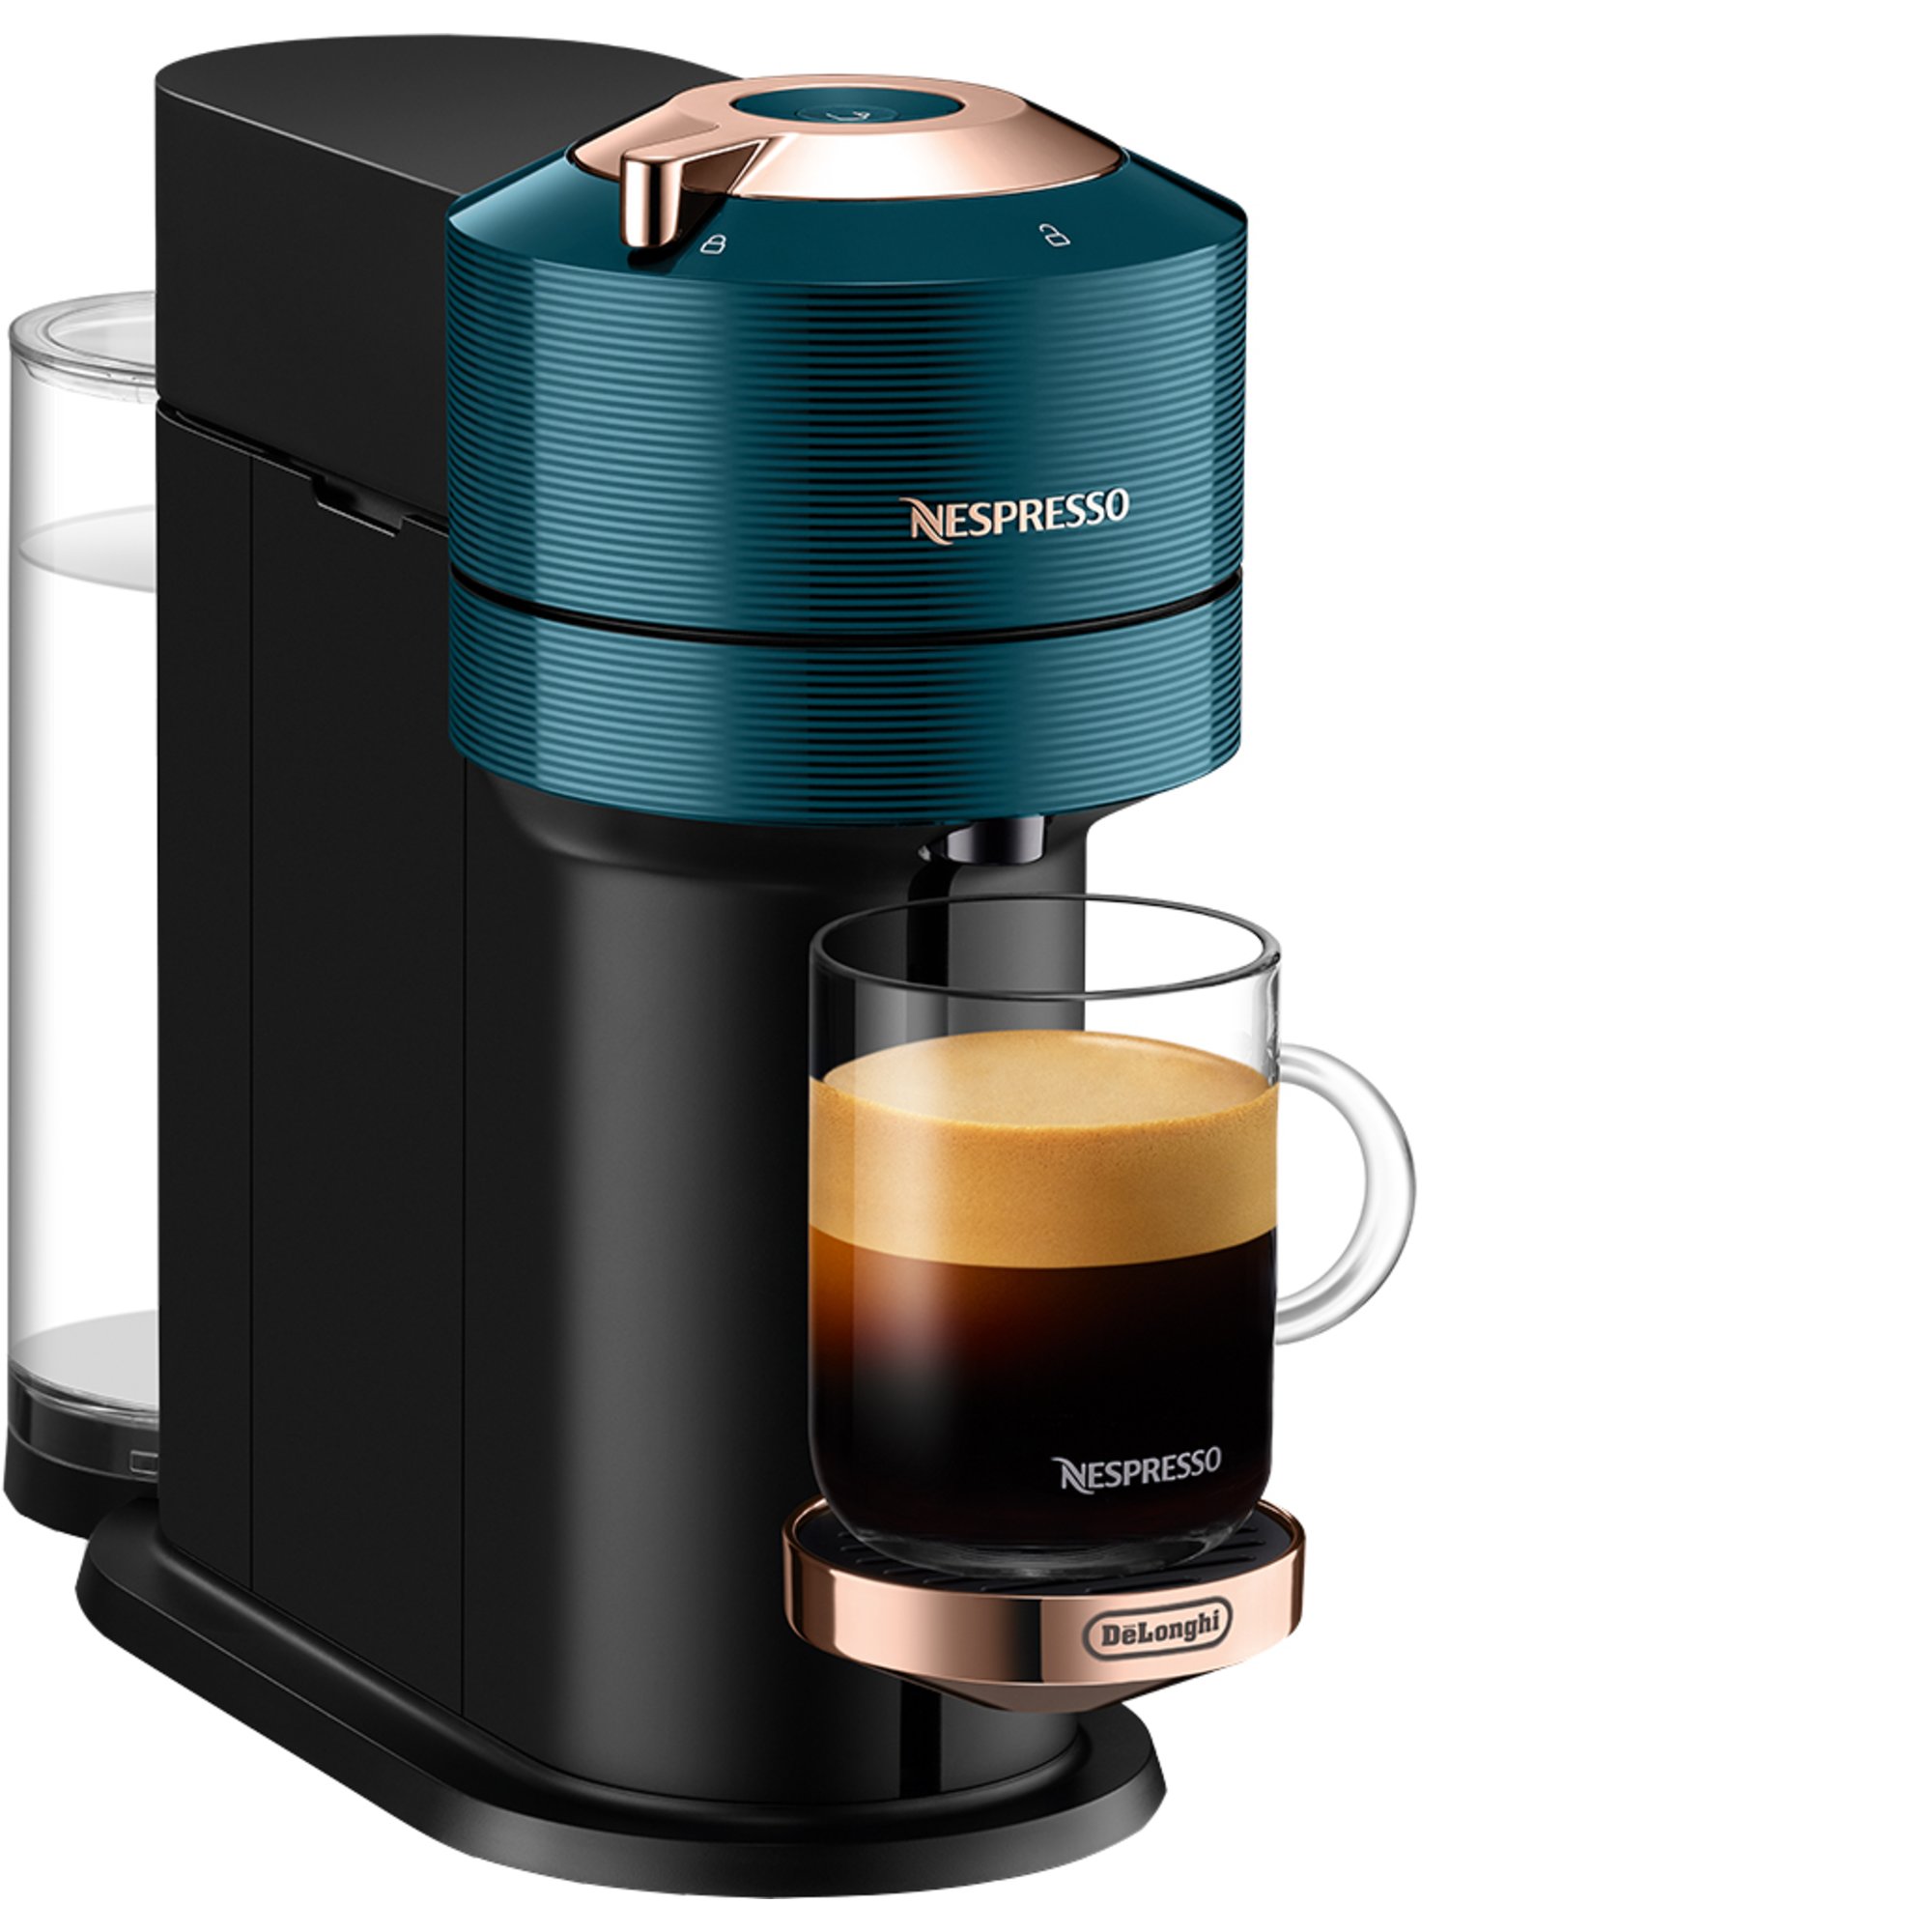 Nespresso Vertuo Next Premium kaffemaskine, 1 liter, teal